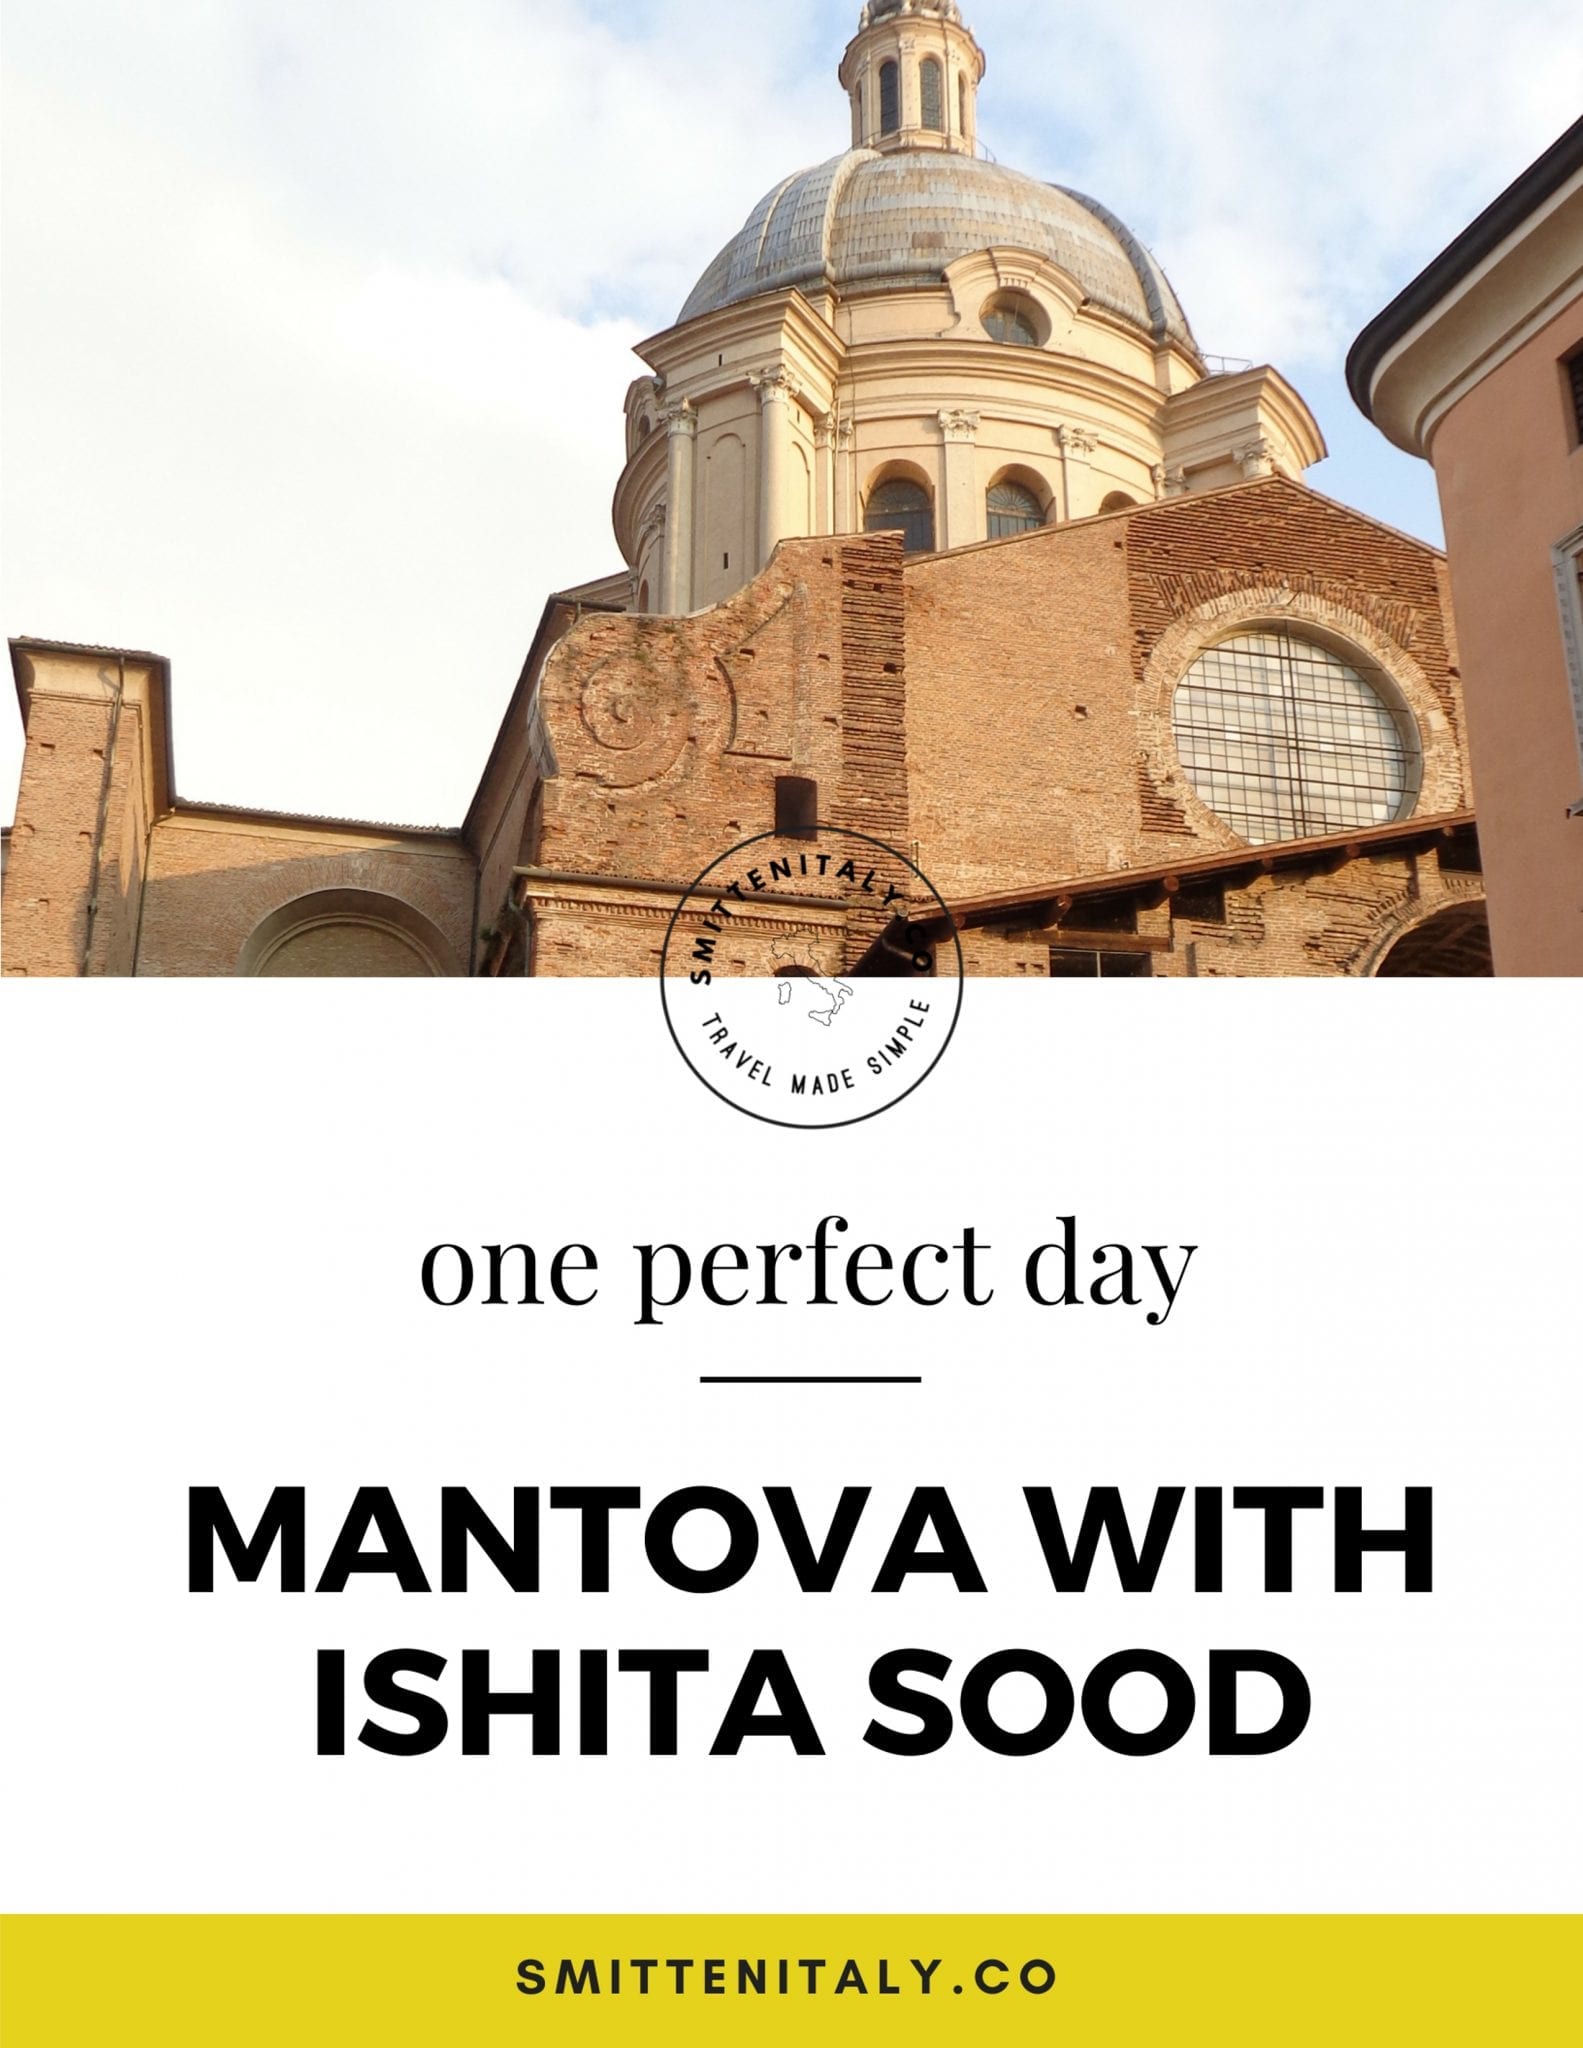 One Perfect Day Travel Guides: Mantova with Ishita Sood